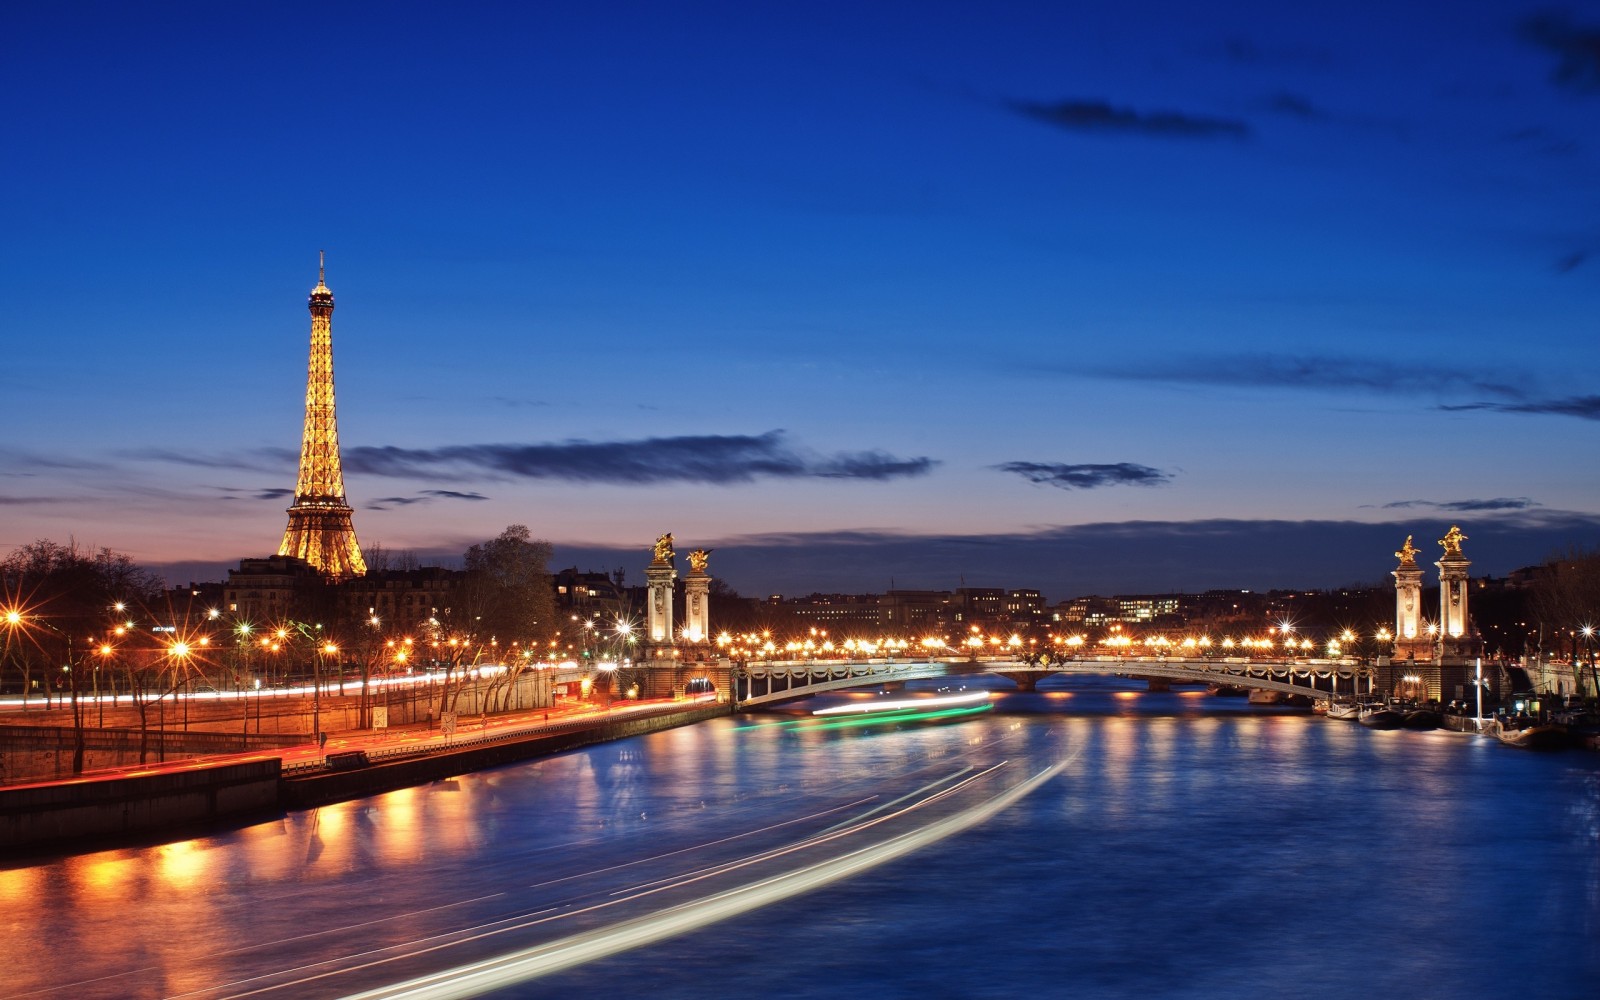 eiffel_tower_paris_night_lights_france_bridge_river_hdr-698553.jpg!d.jpg